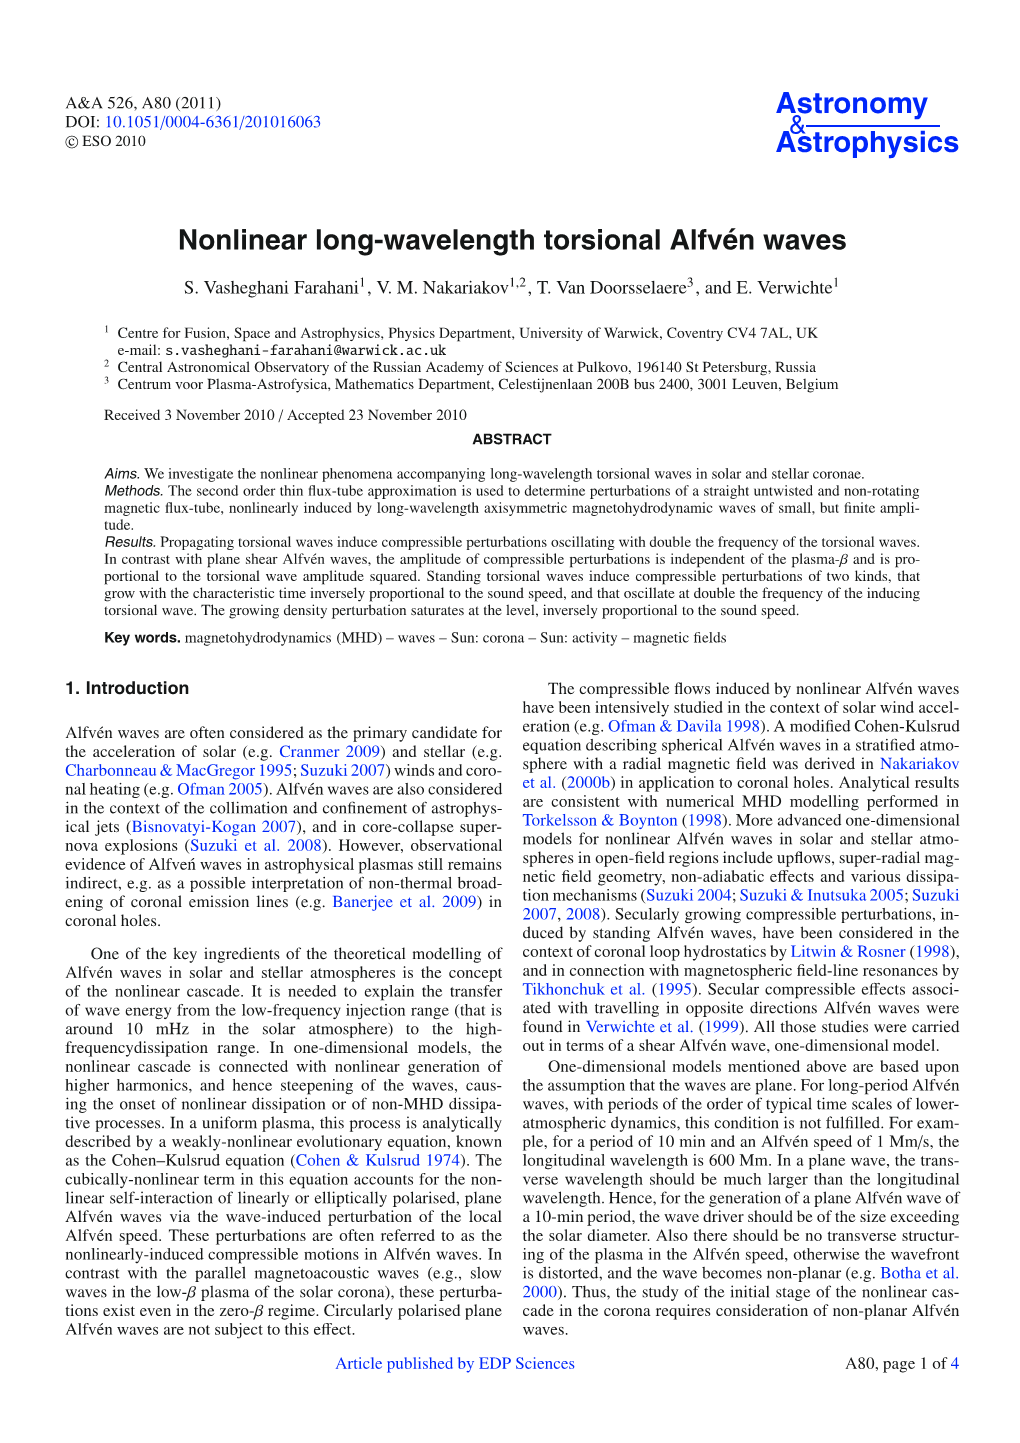 Nonlinear Long-Wavelength Torsional Alfvén Waves